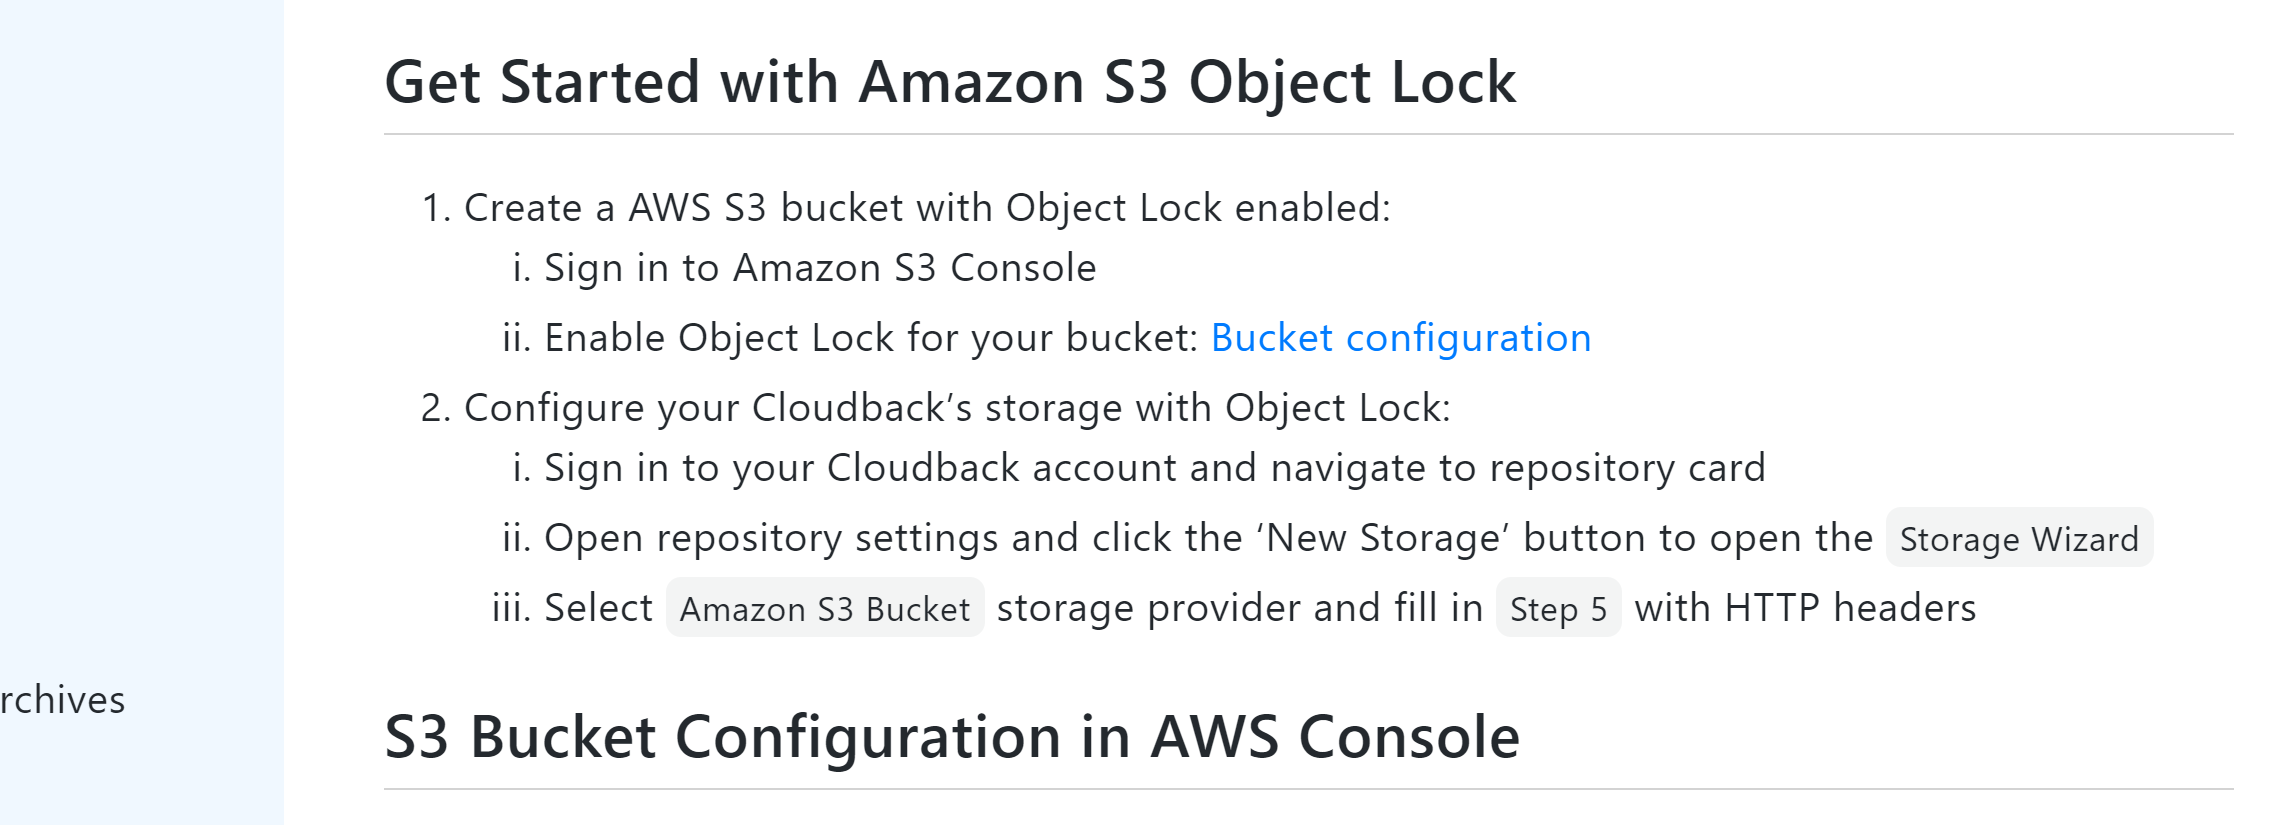 Amazon S3 Object Lock